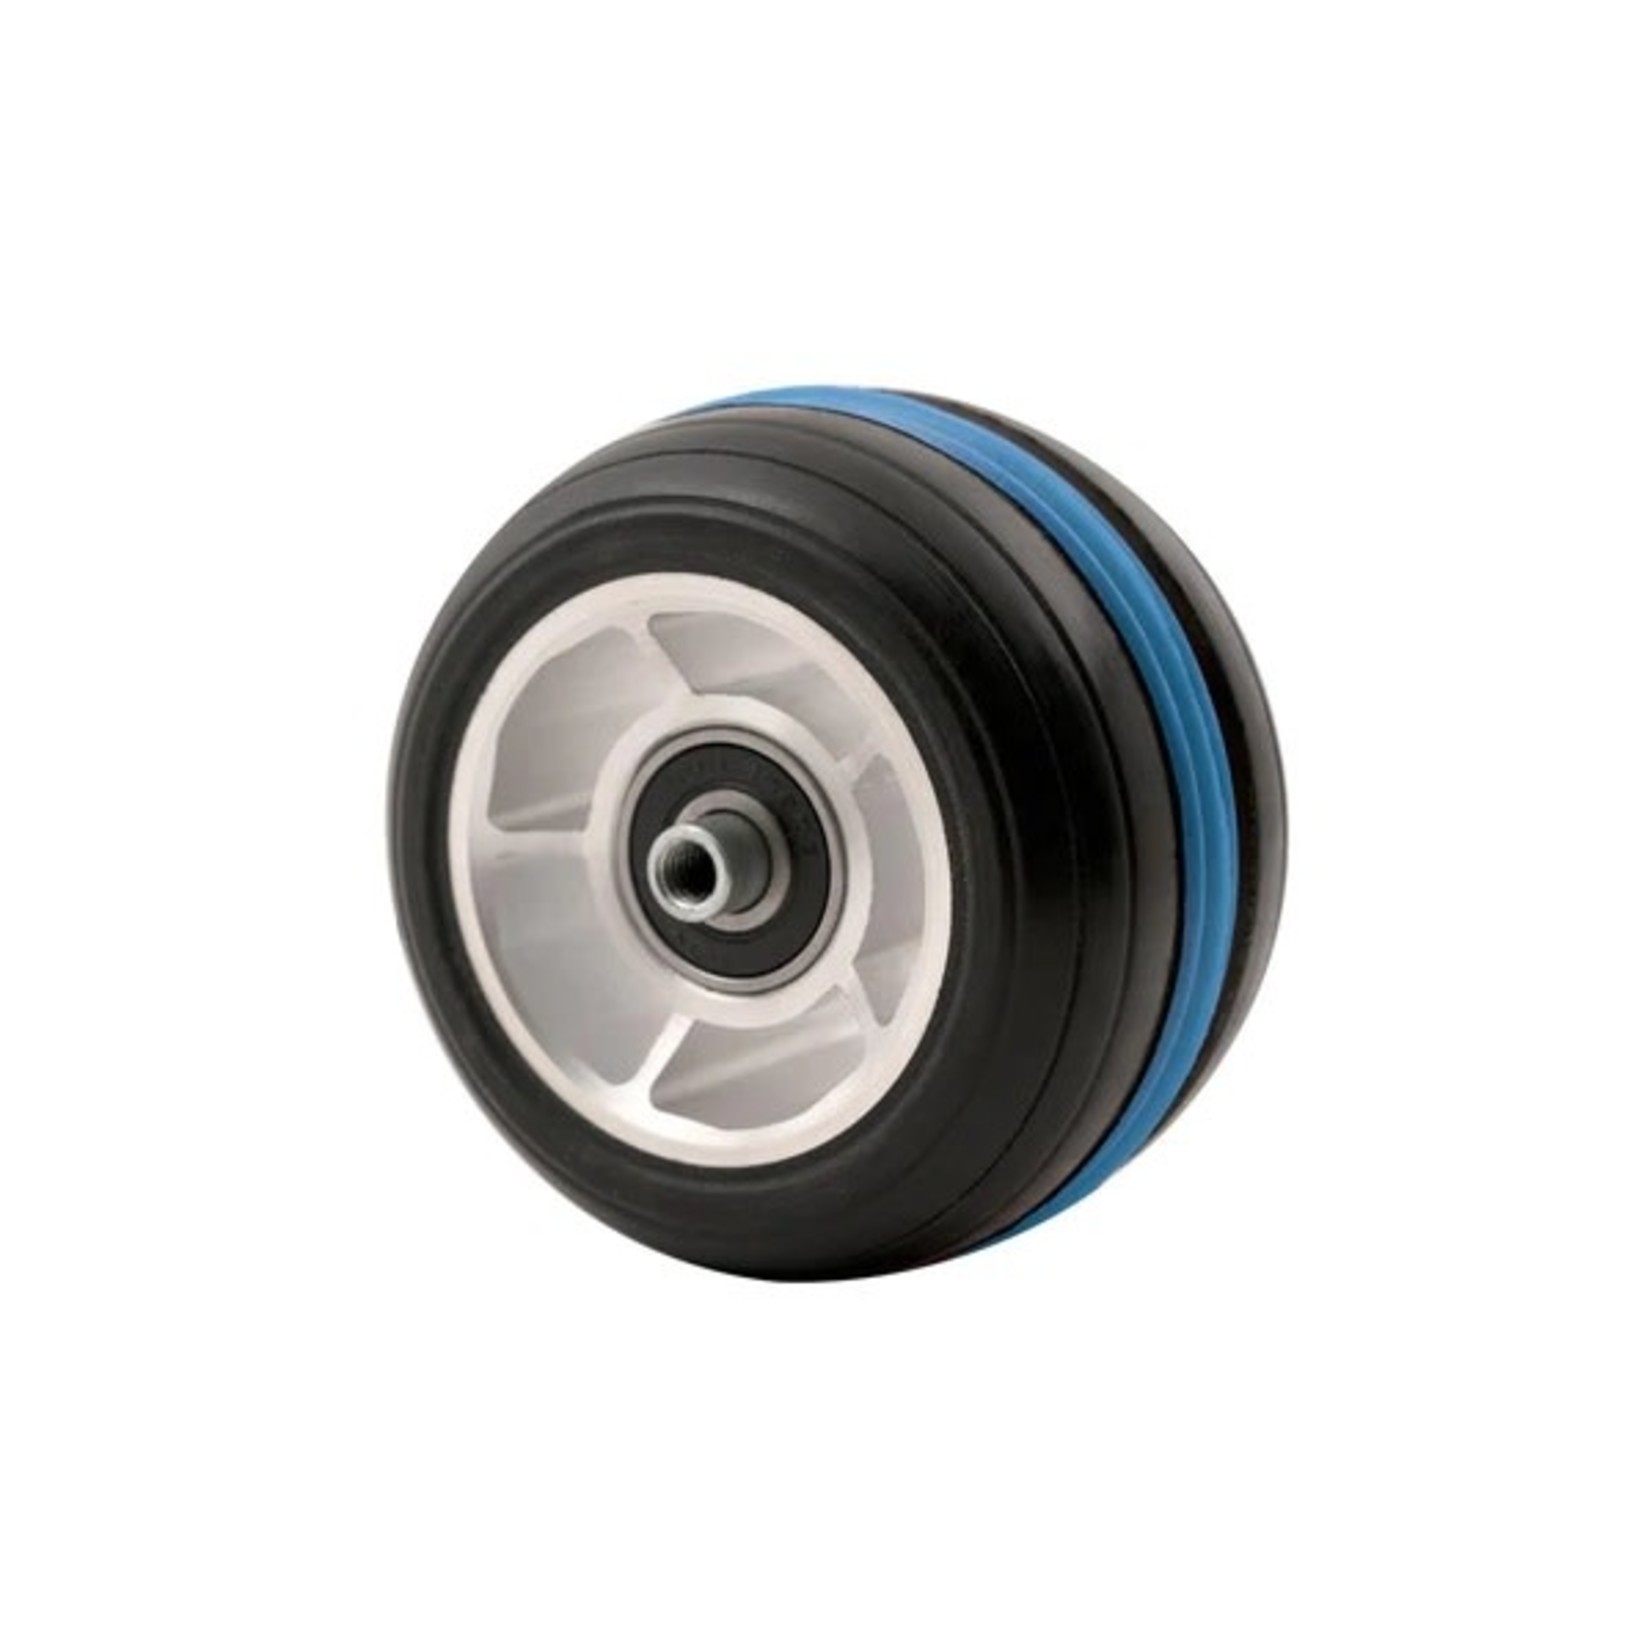 Rundle Sport RUNDLE SPORT, Classic Wheel, Non-Locking (2-bolt)